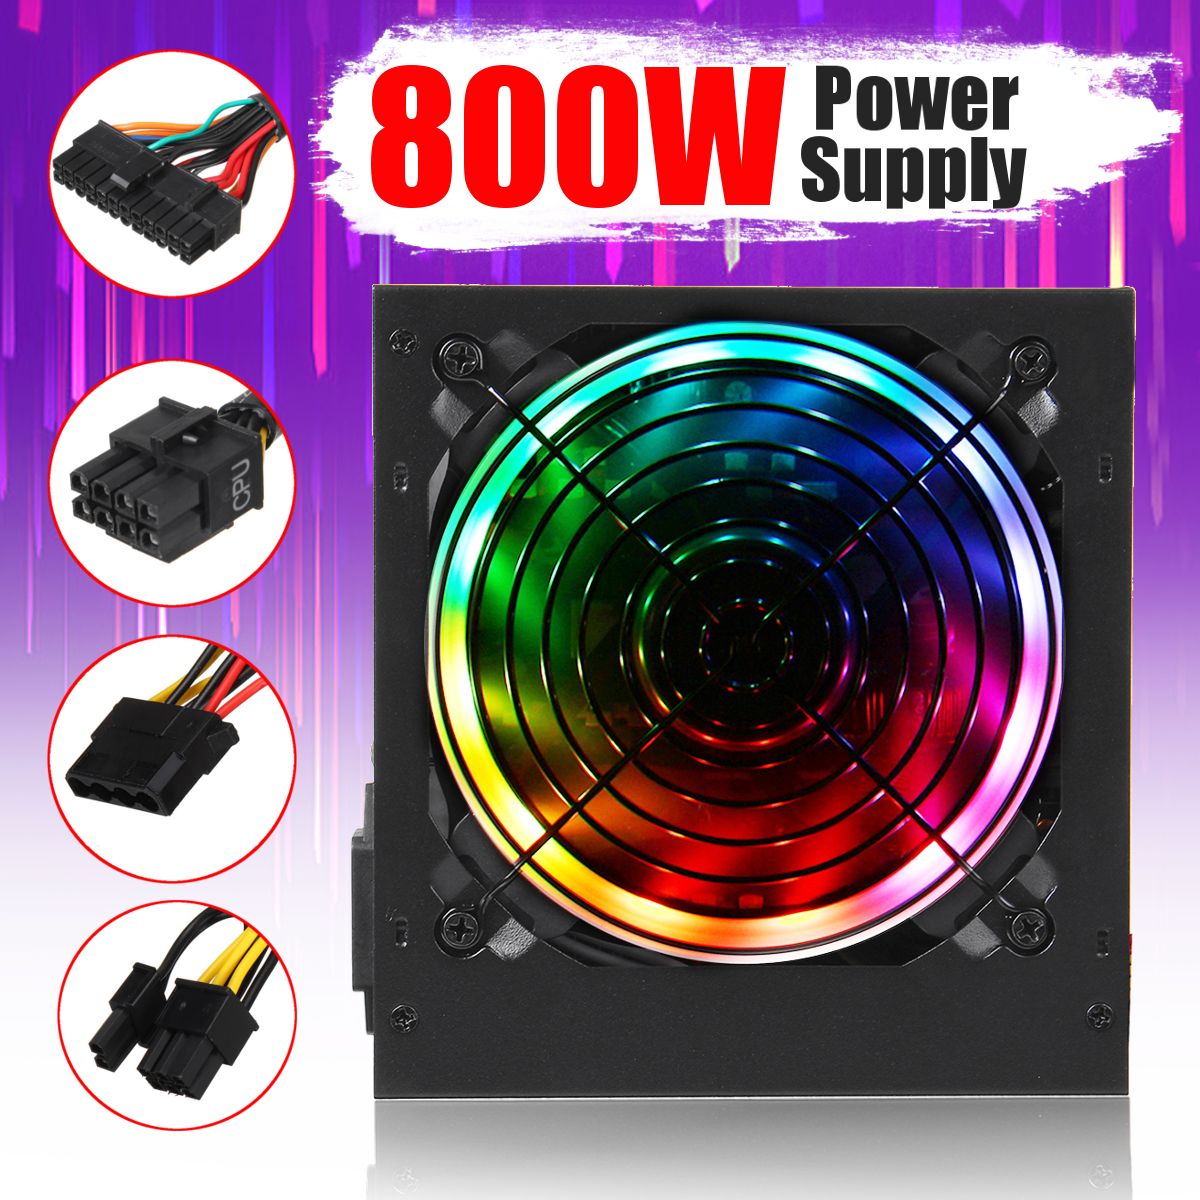 800W-ATX-12V-PC-Computer-Desktop-Power-Supply-PCI-SATA-LED-Fan-24pin-Gaming-1673385